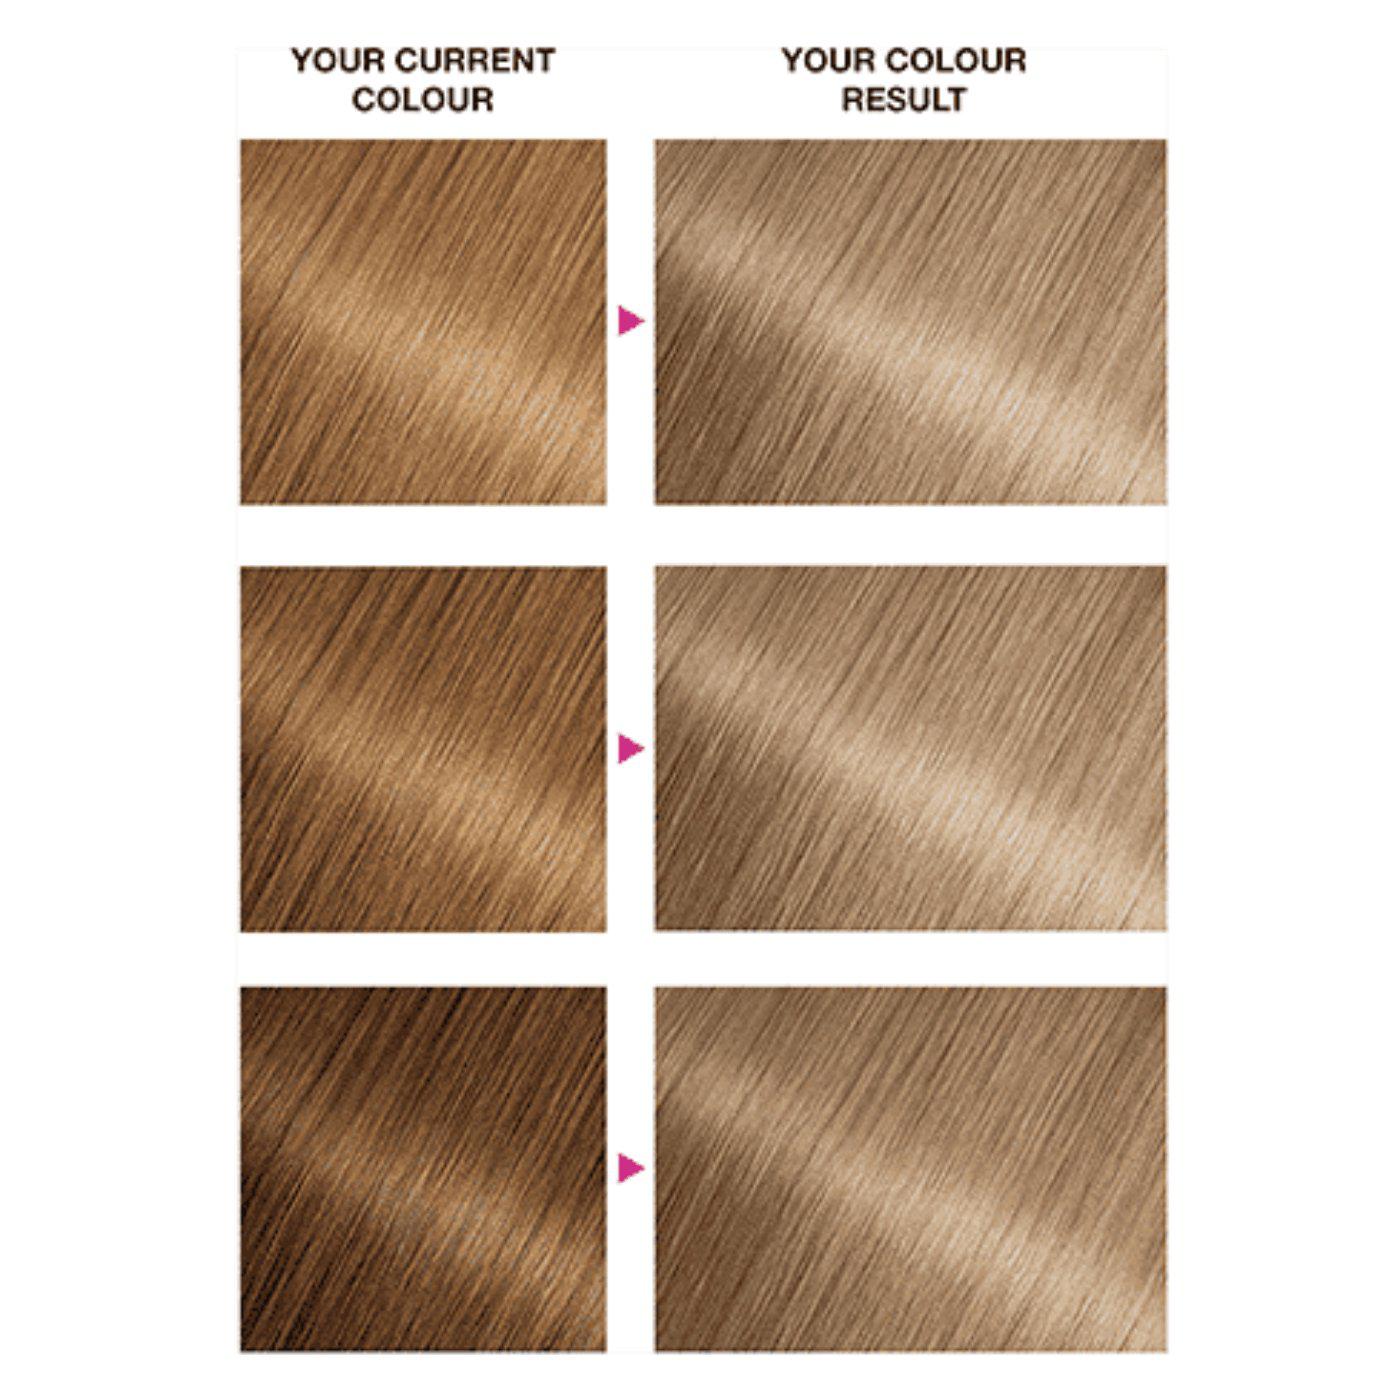 Garnier Nutrisse Permanent Hair Dye - 100% Grey Hair Coverage - Light Blonde 9 - Healthxpress.ie